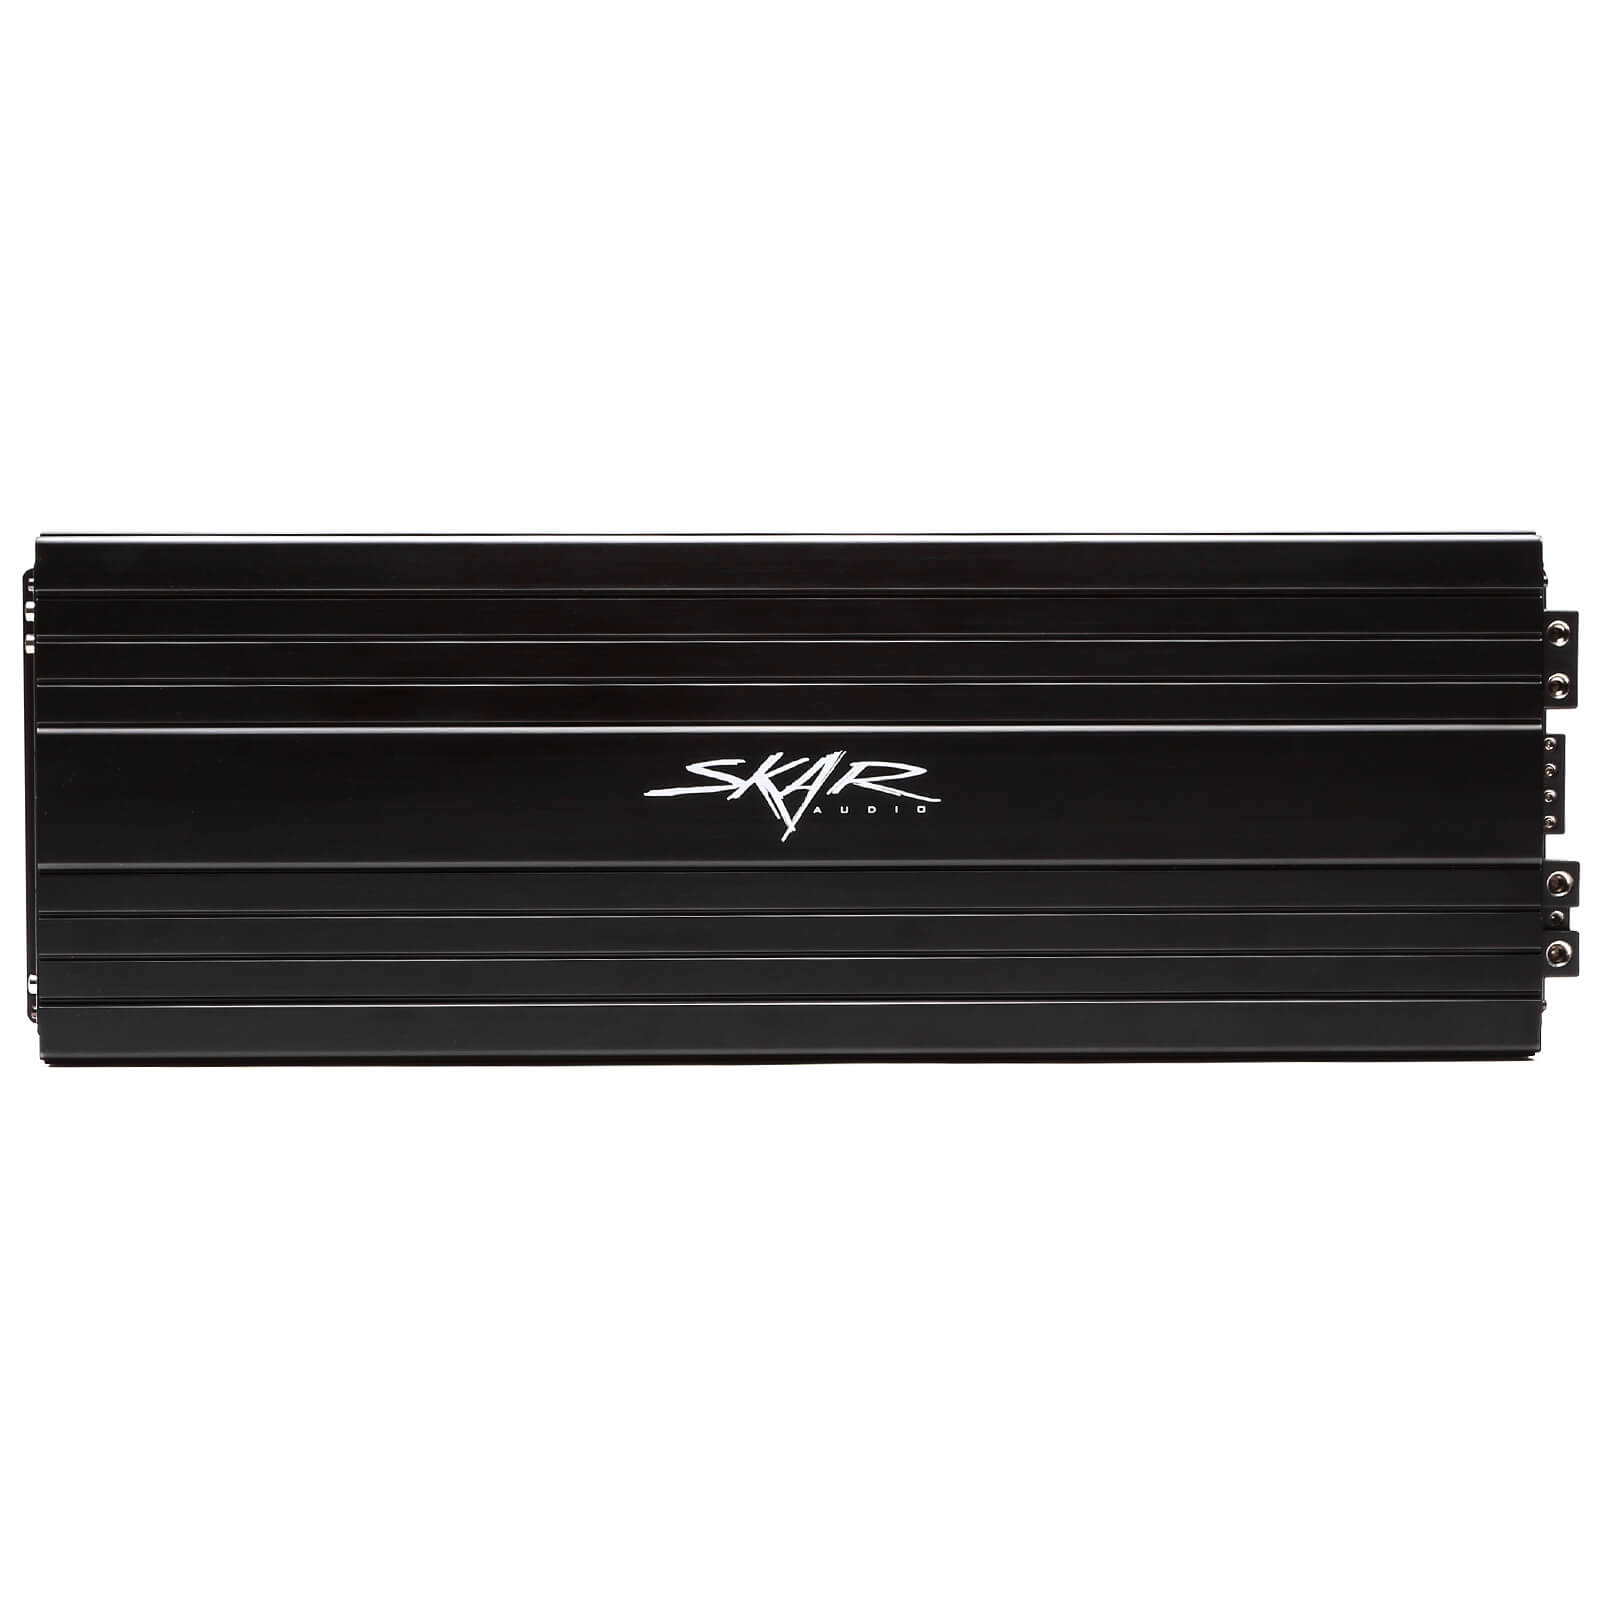 Skar Audio SKv2-4500.1D 4,500 Watt Class D Monoblock Car Amplifier - Main View